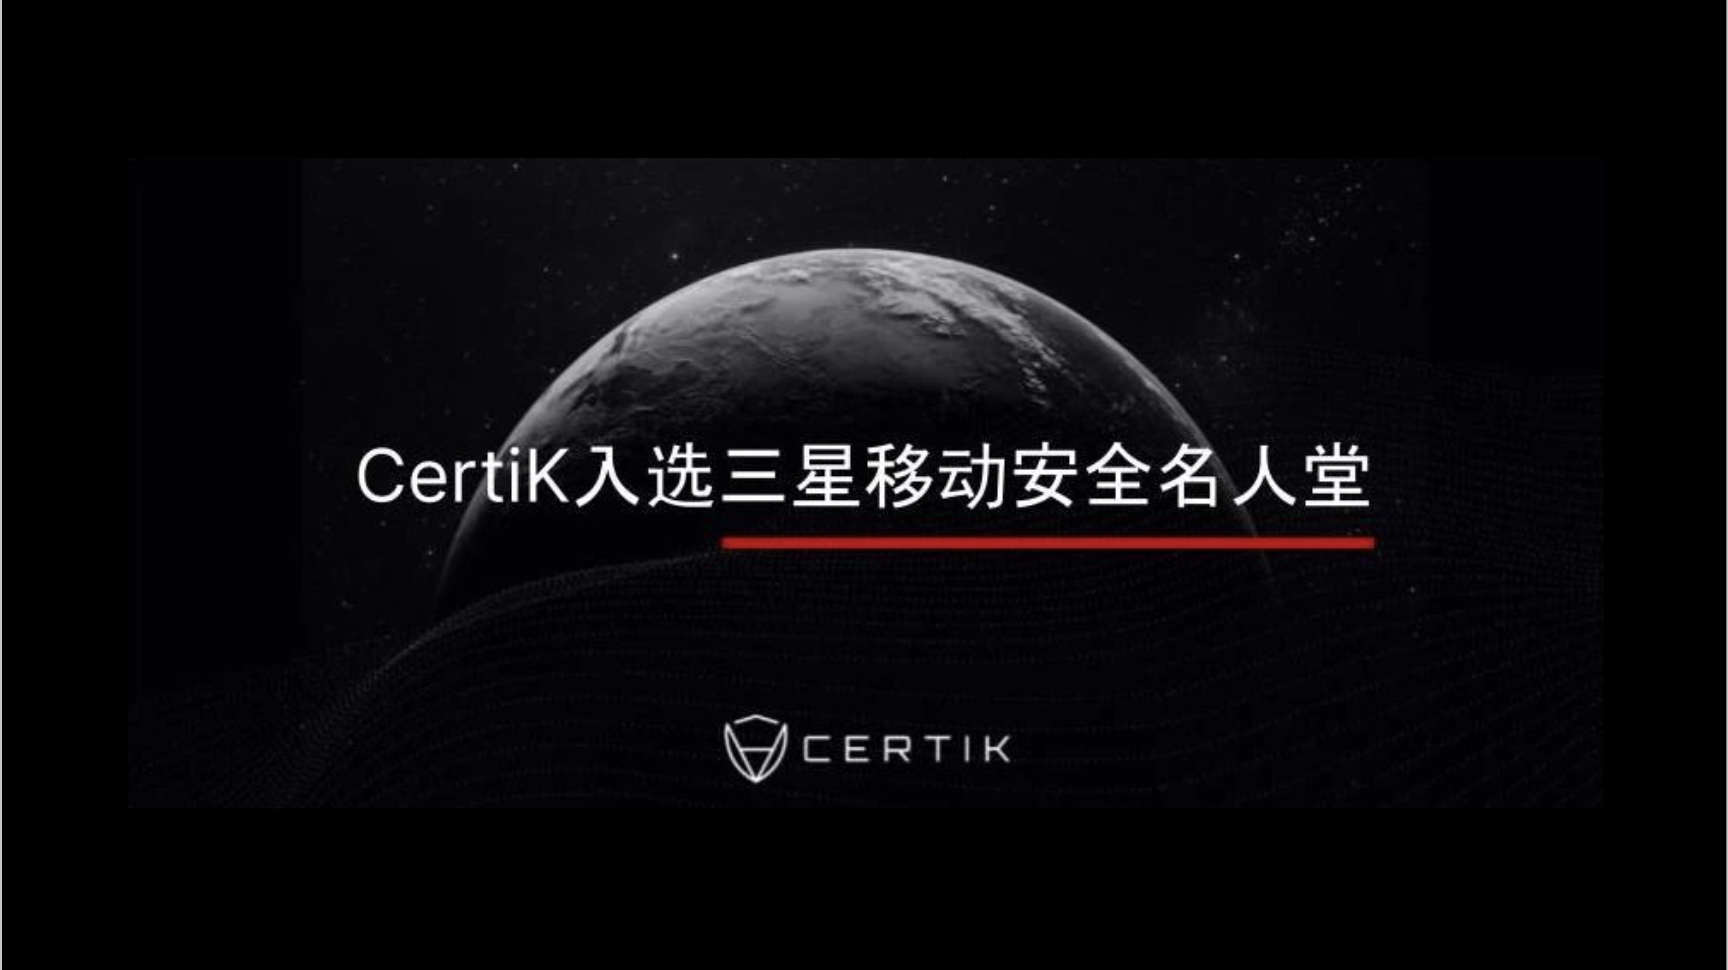 CertiK入选三星“移动安全名人堂”，团队个人双双获奖